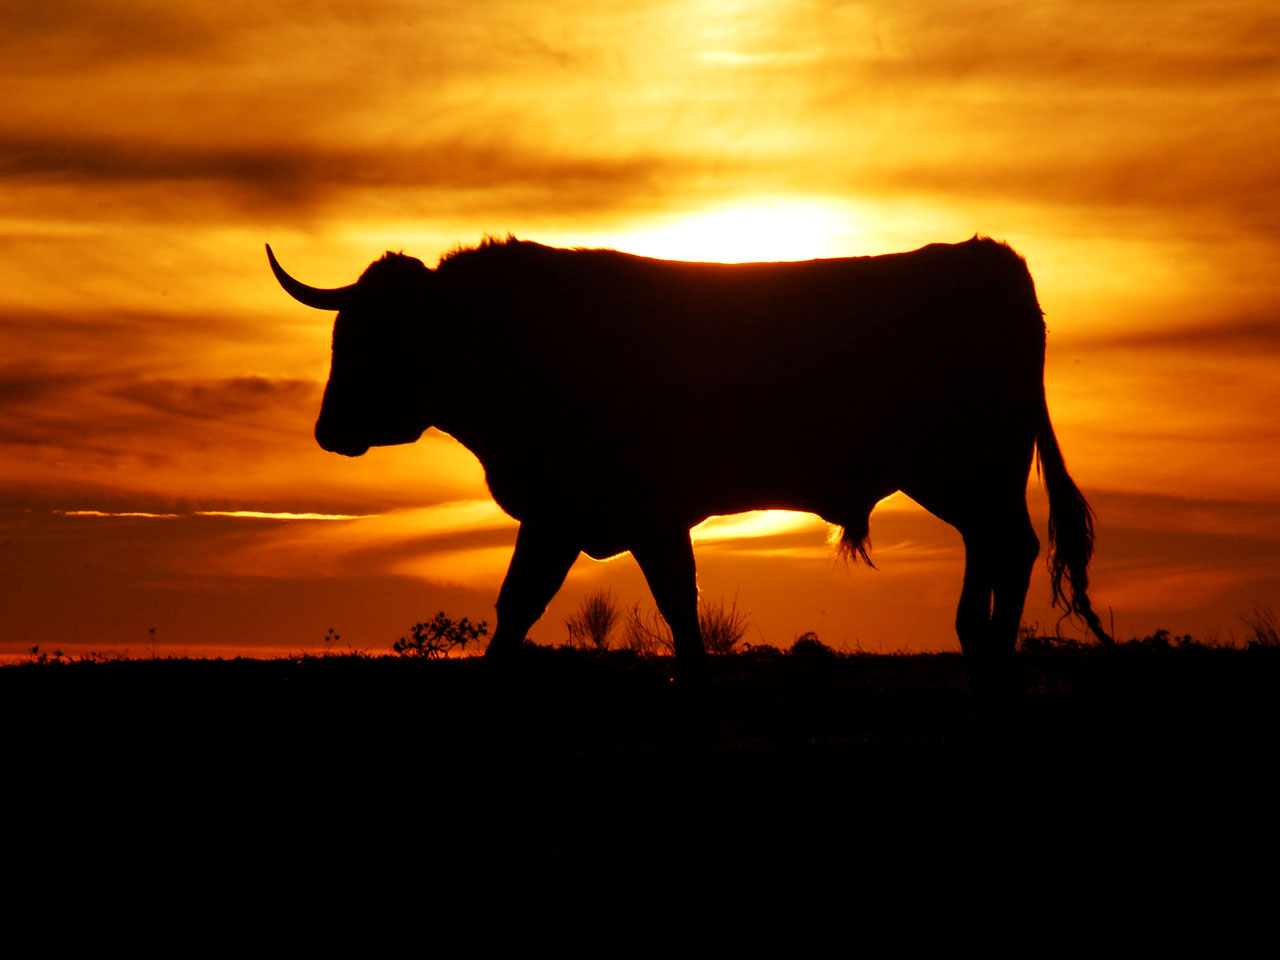 big bull on background sunset, download photo, wallpapers for desktop